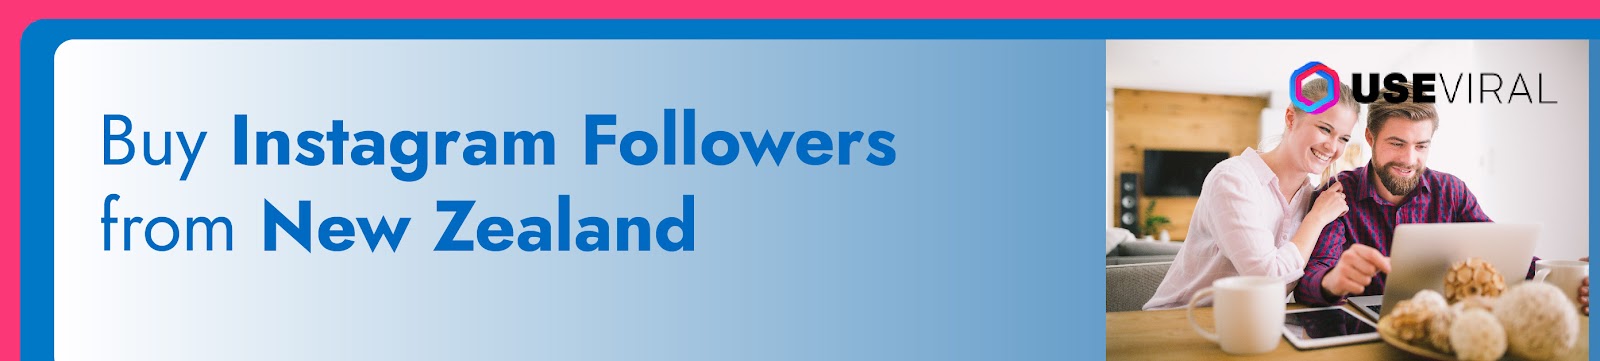 Buy Instagram Followers from New Zealand